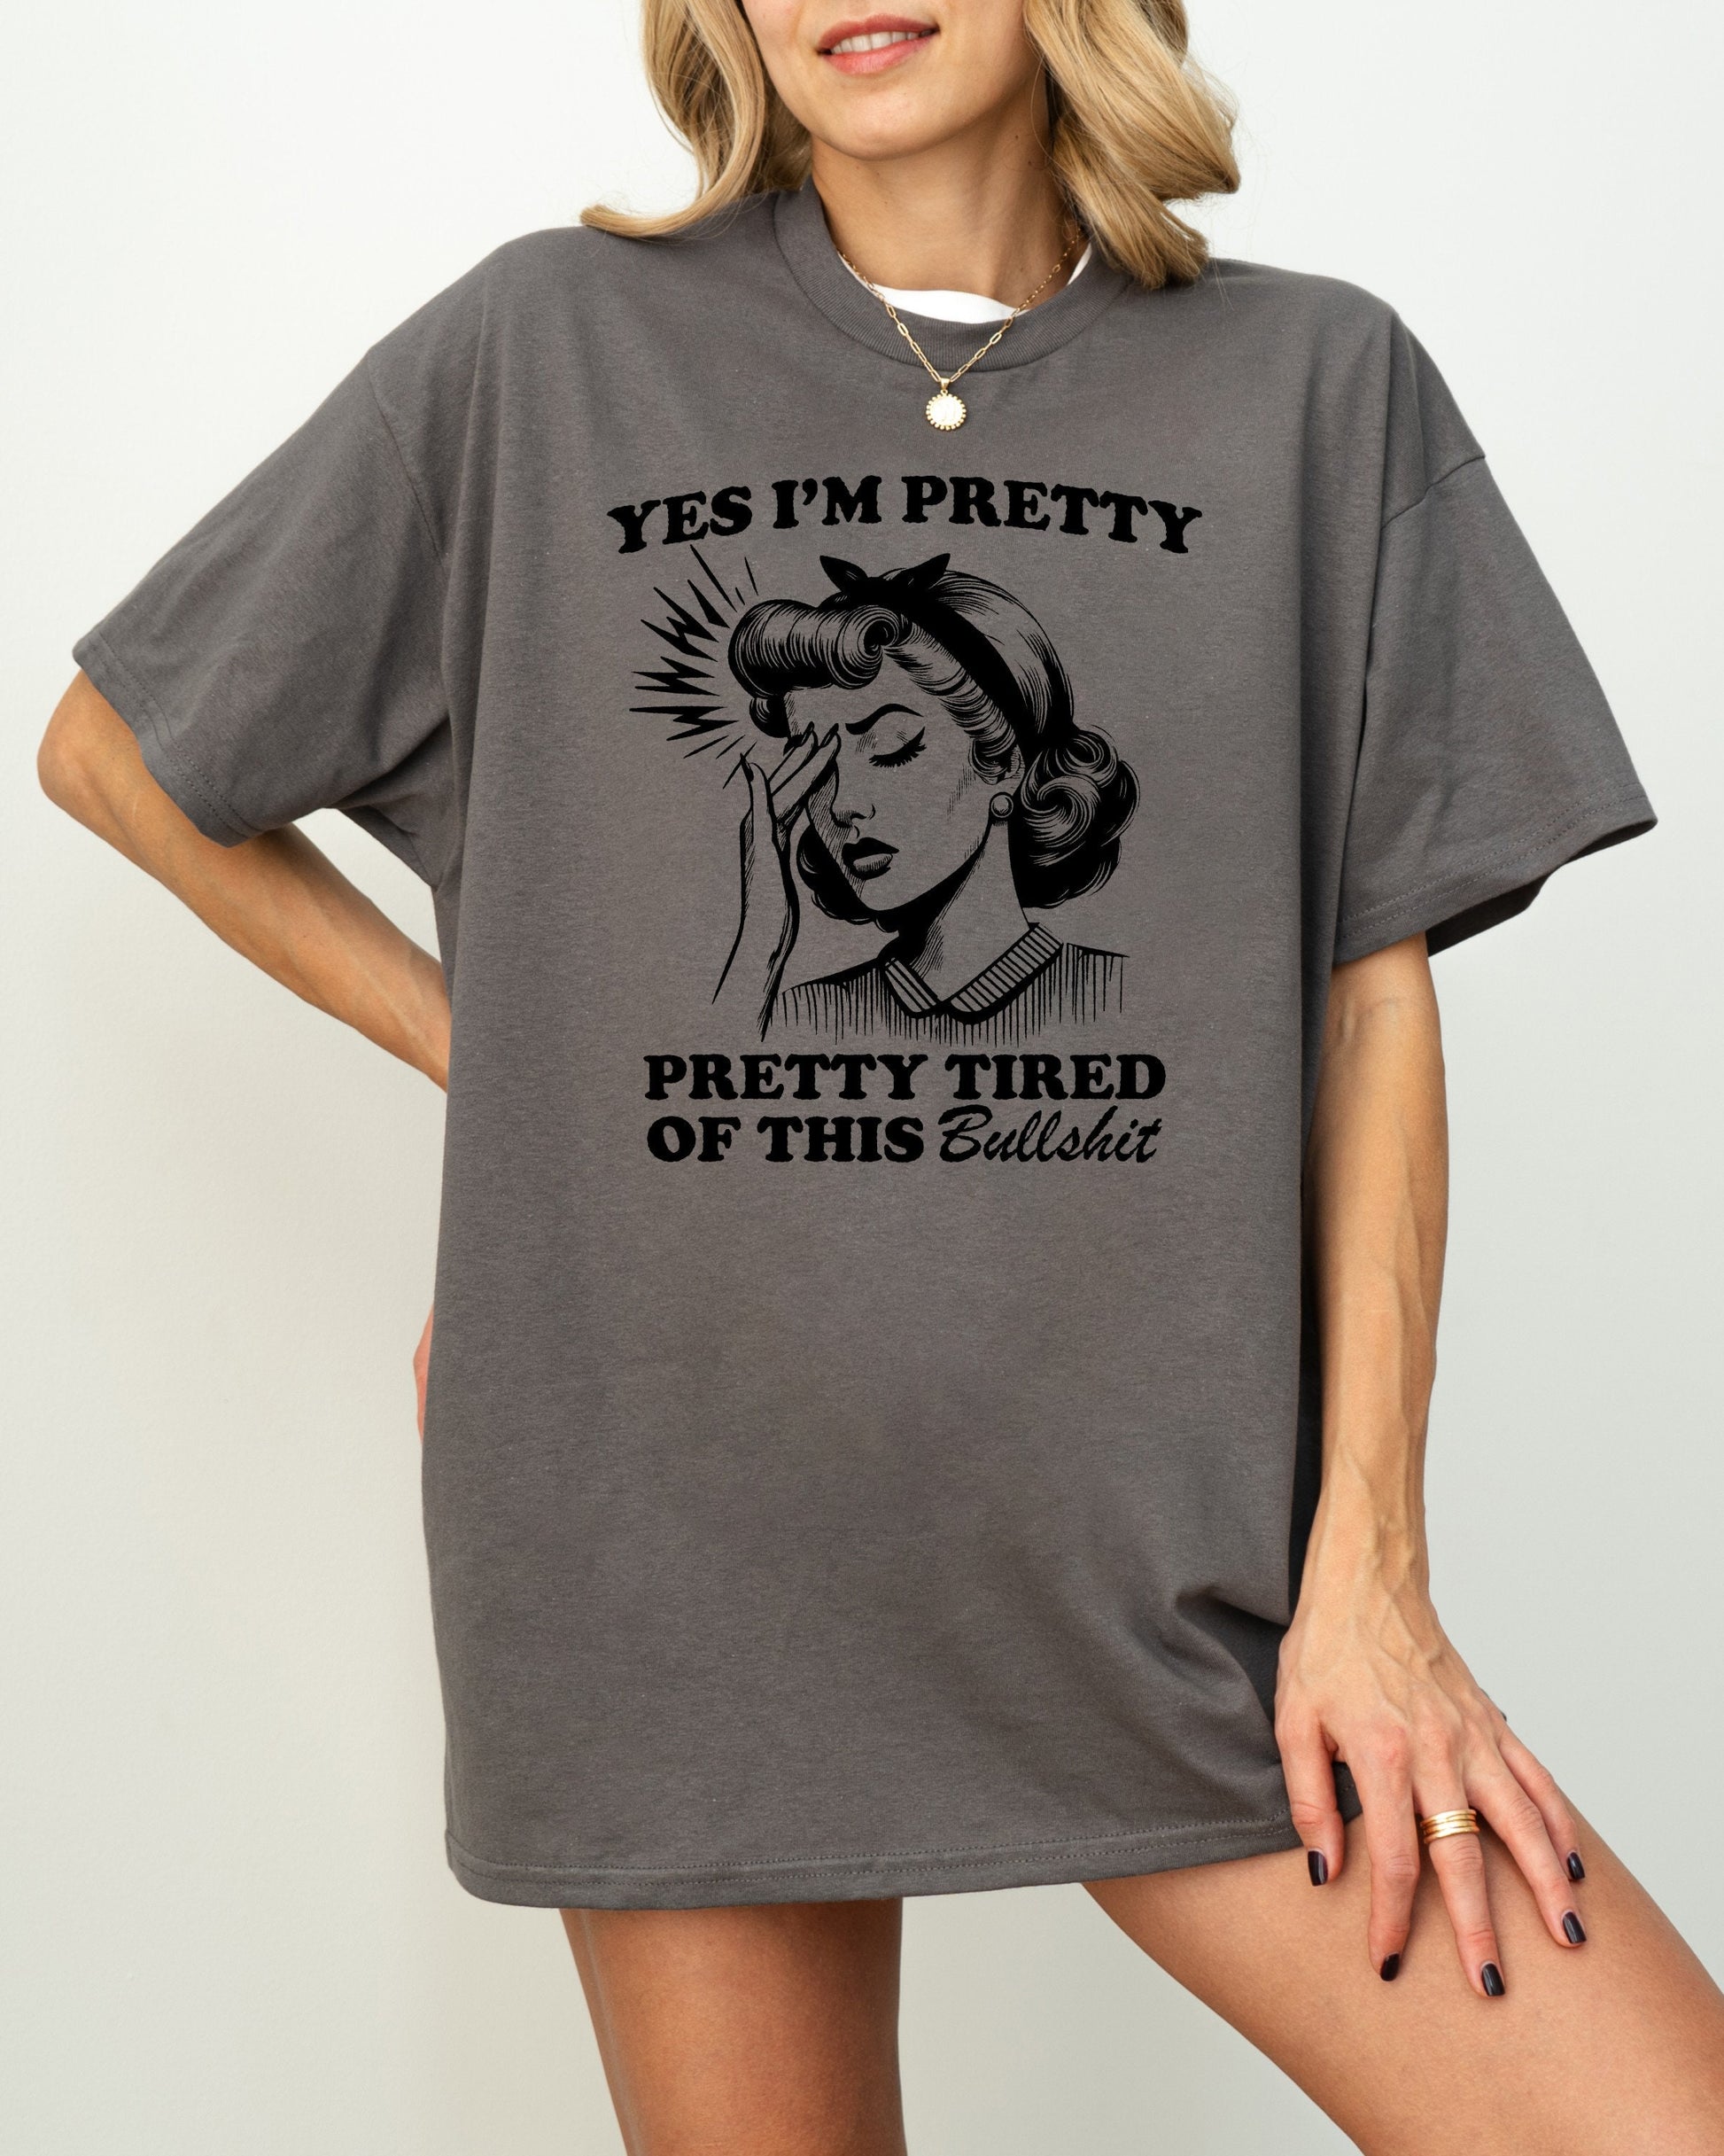 Yes I'm Pretty Pretty Tired of this Bullshit T-shirt Graphic Shirt Funny Adult TShirt Vintage Funny Shirt Nostalgia Shirt Relaxed Cotton Tee